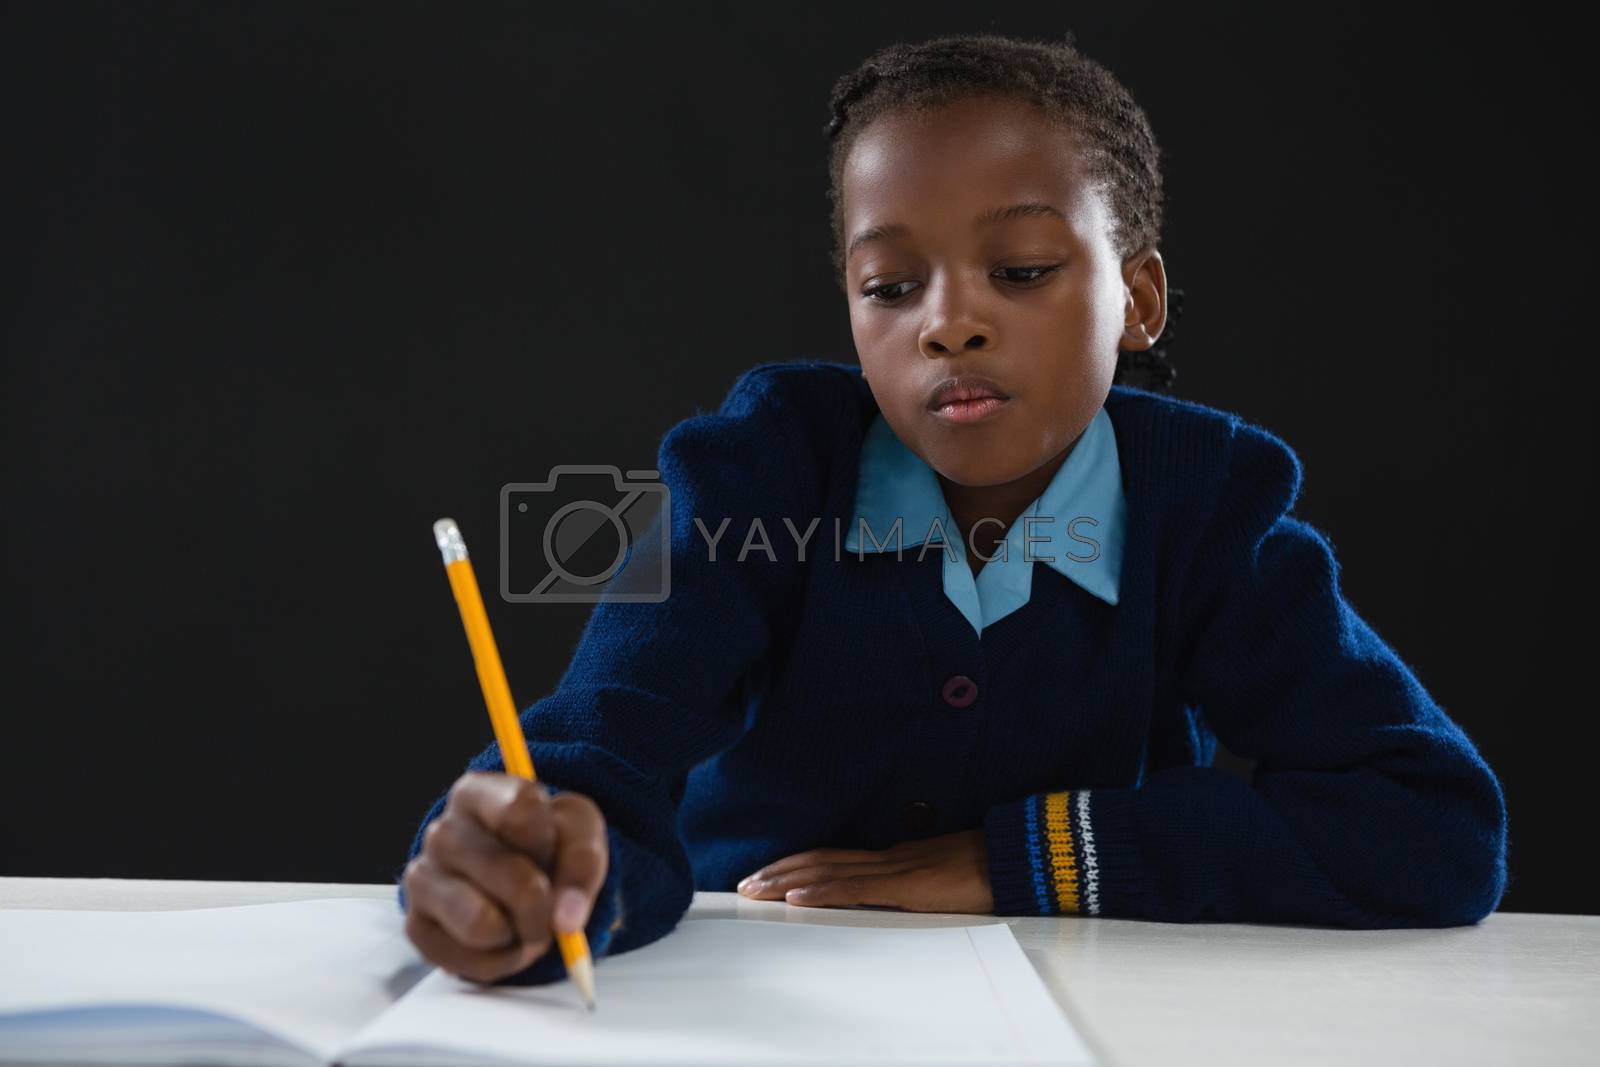 Royalty free image of Schoolgirl doing her homework against black background by Wavebreakmedia